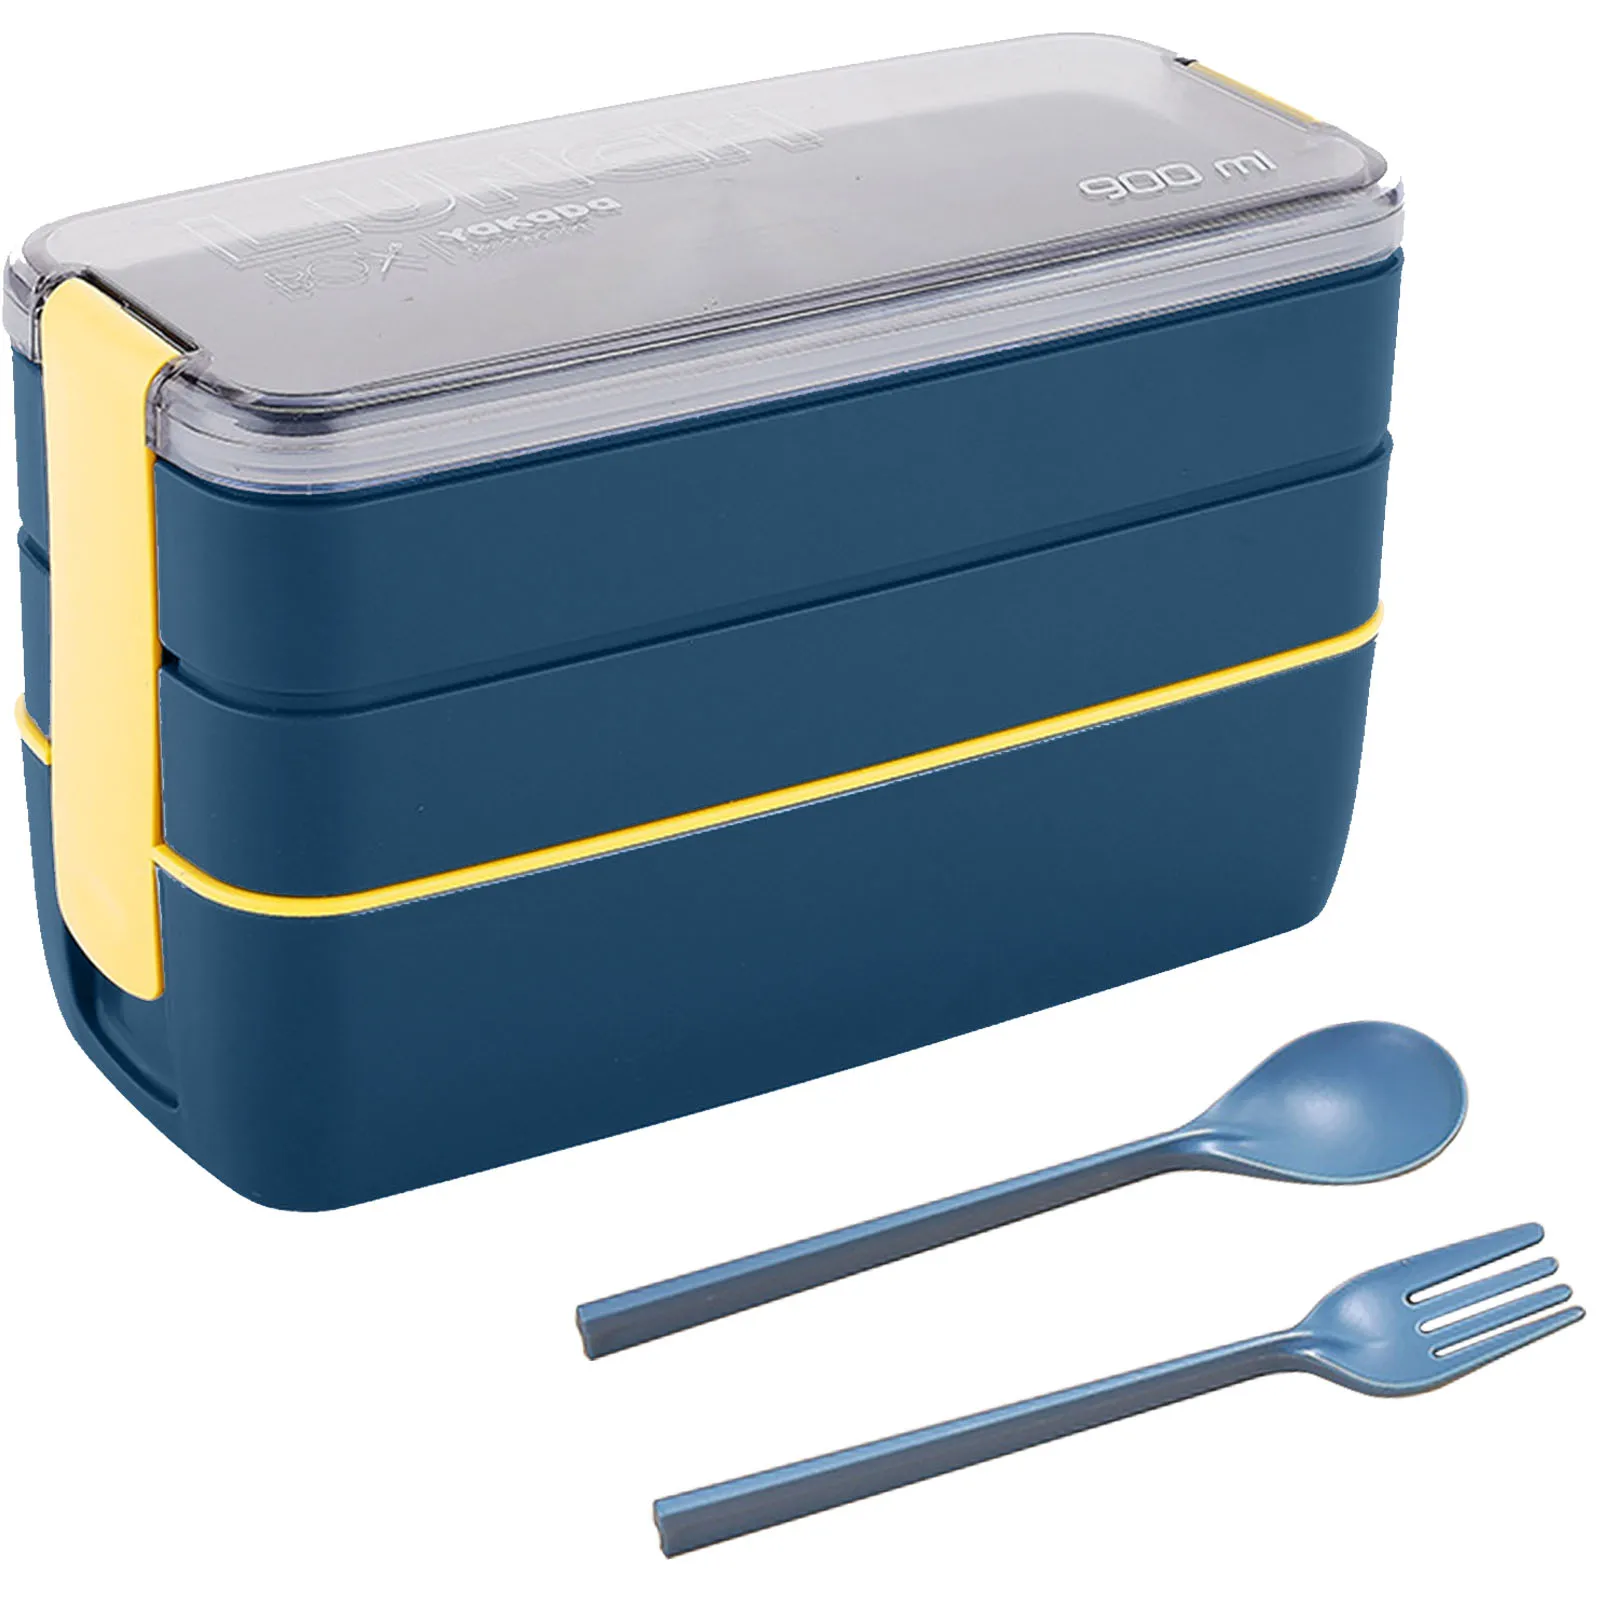 https://ae01.alicdn.com/kf/S39d2d4d2d784477983a882b08bcb3c9c0/3-Compartments-Durable-Stackable-Large-Capacity-School-Portable-Food-Grade-Bento-Box-Microwave-Safe-Leak-Proof.jpg